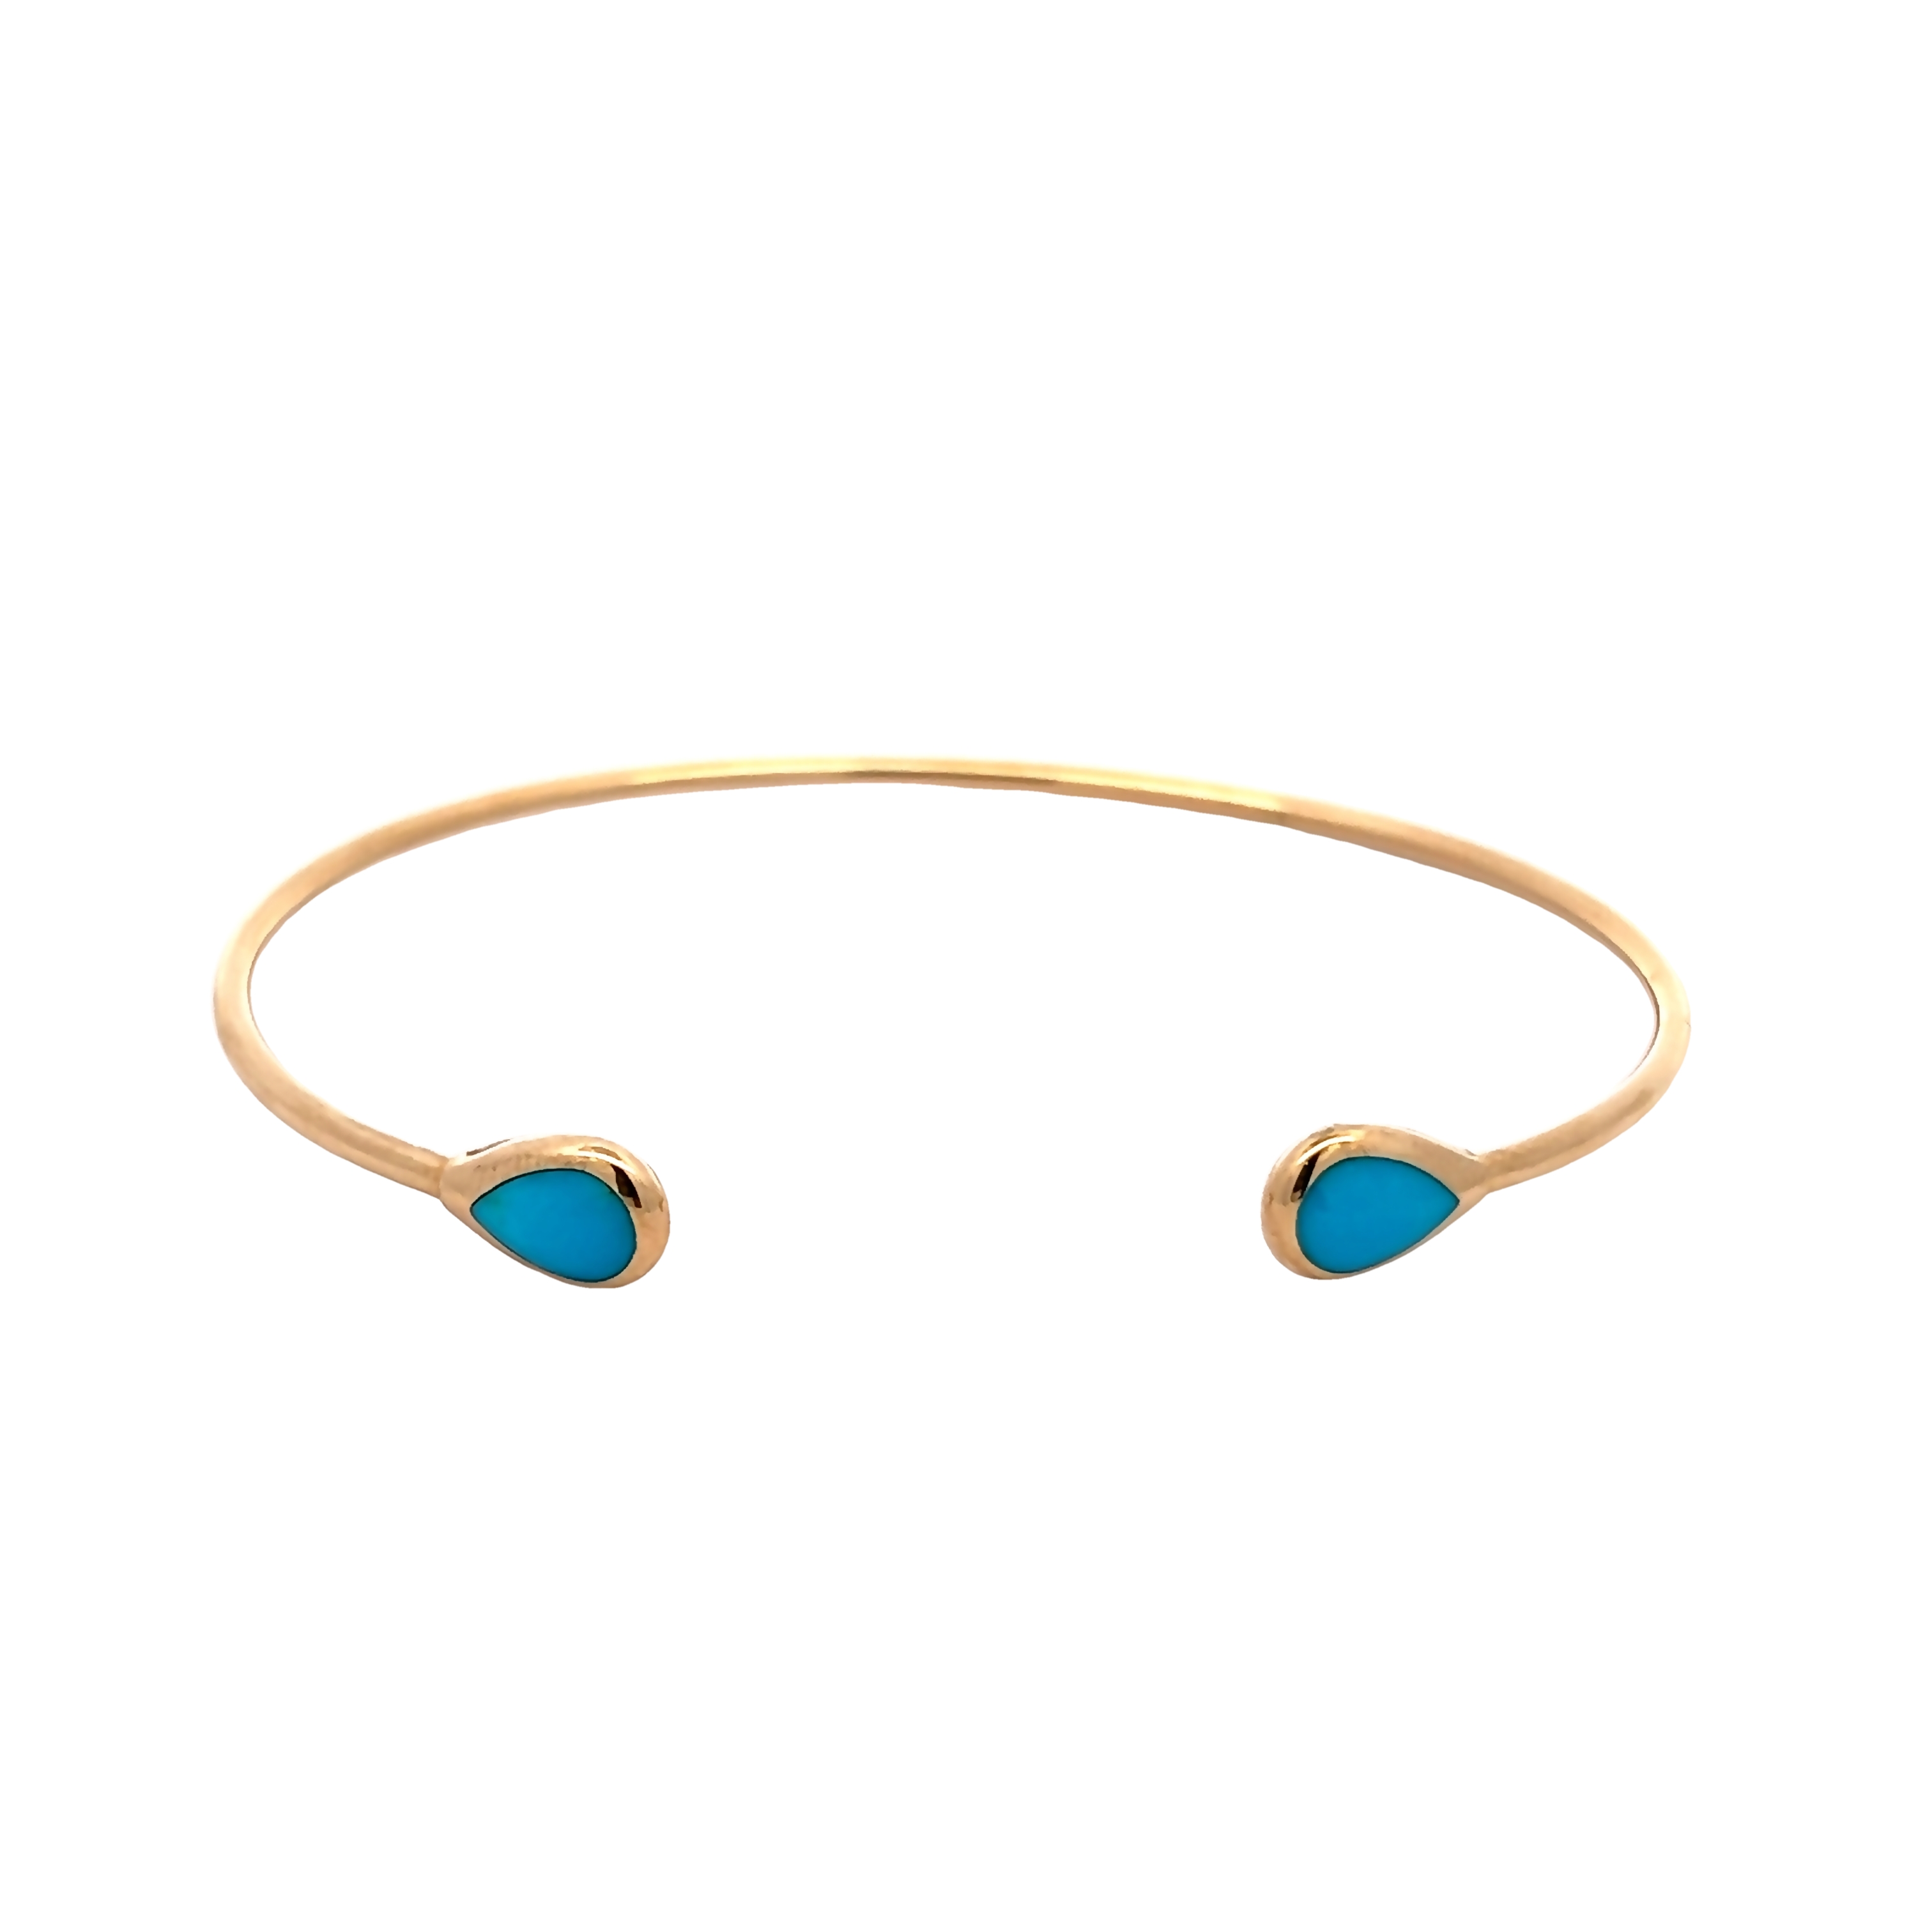 14 Karat yellow gold cuff bracelet with Sleeping Beauty Turquoise inlay